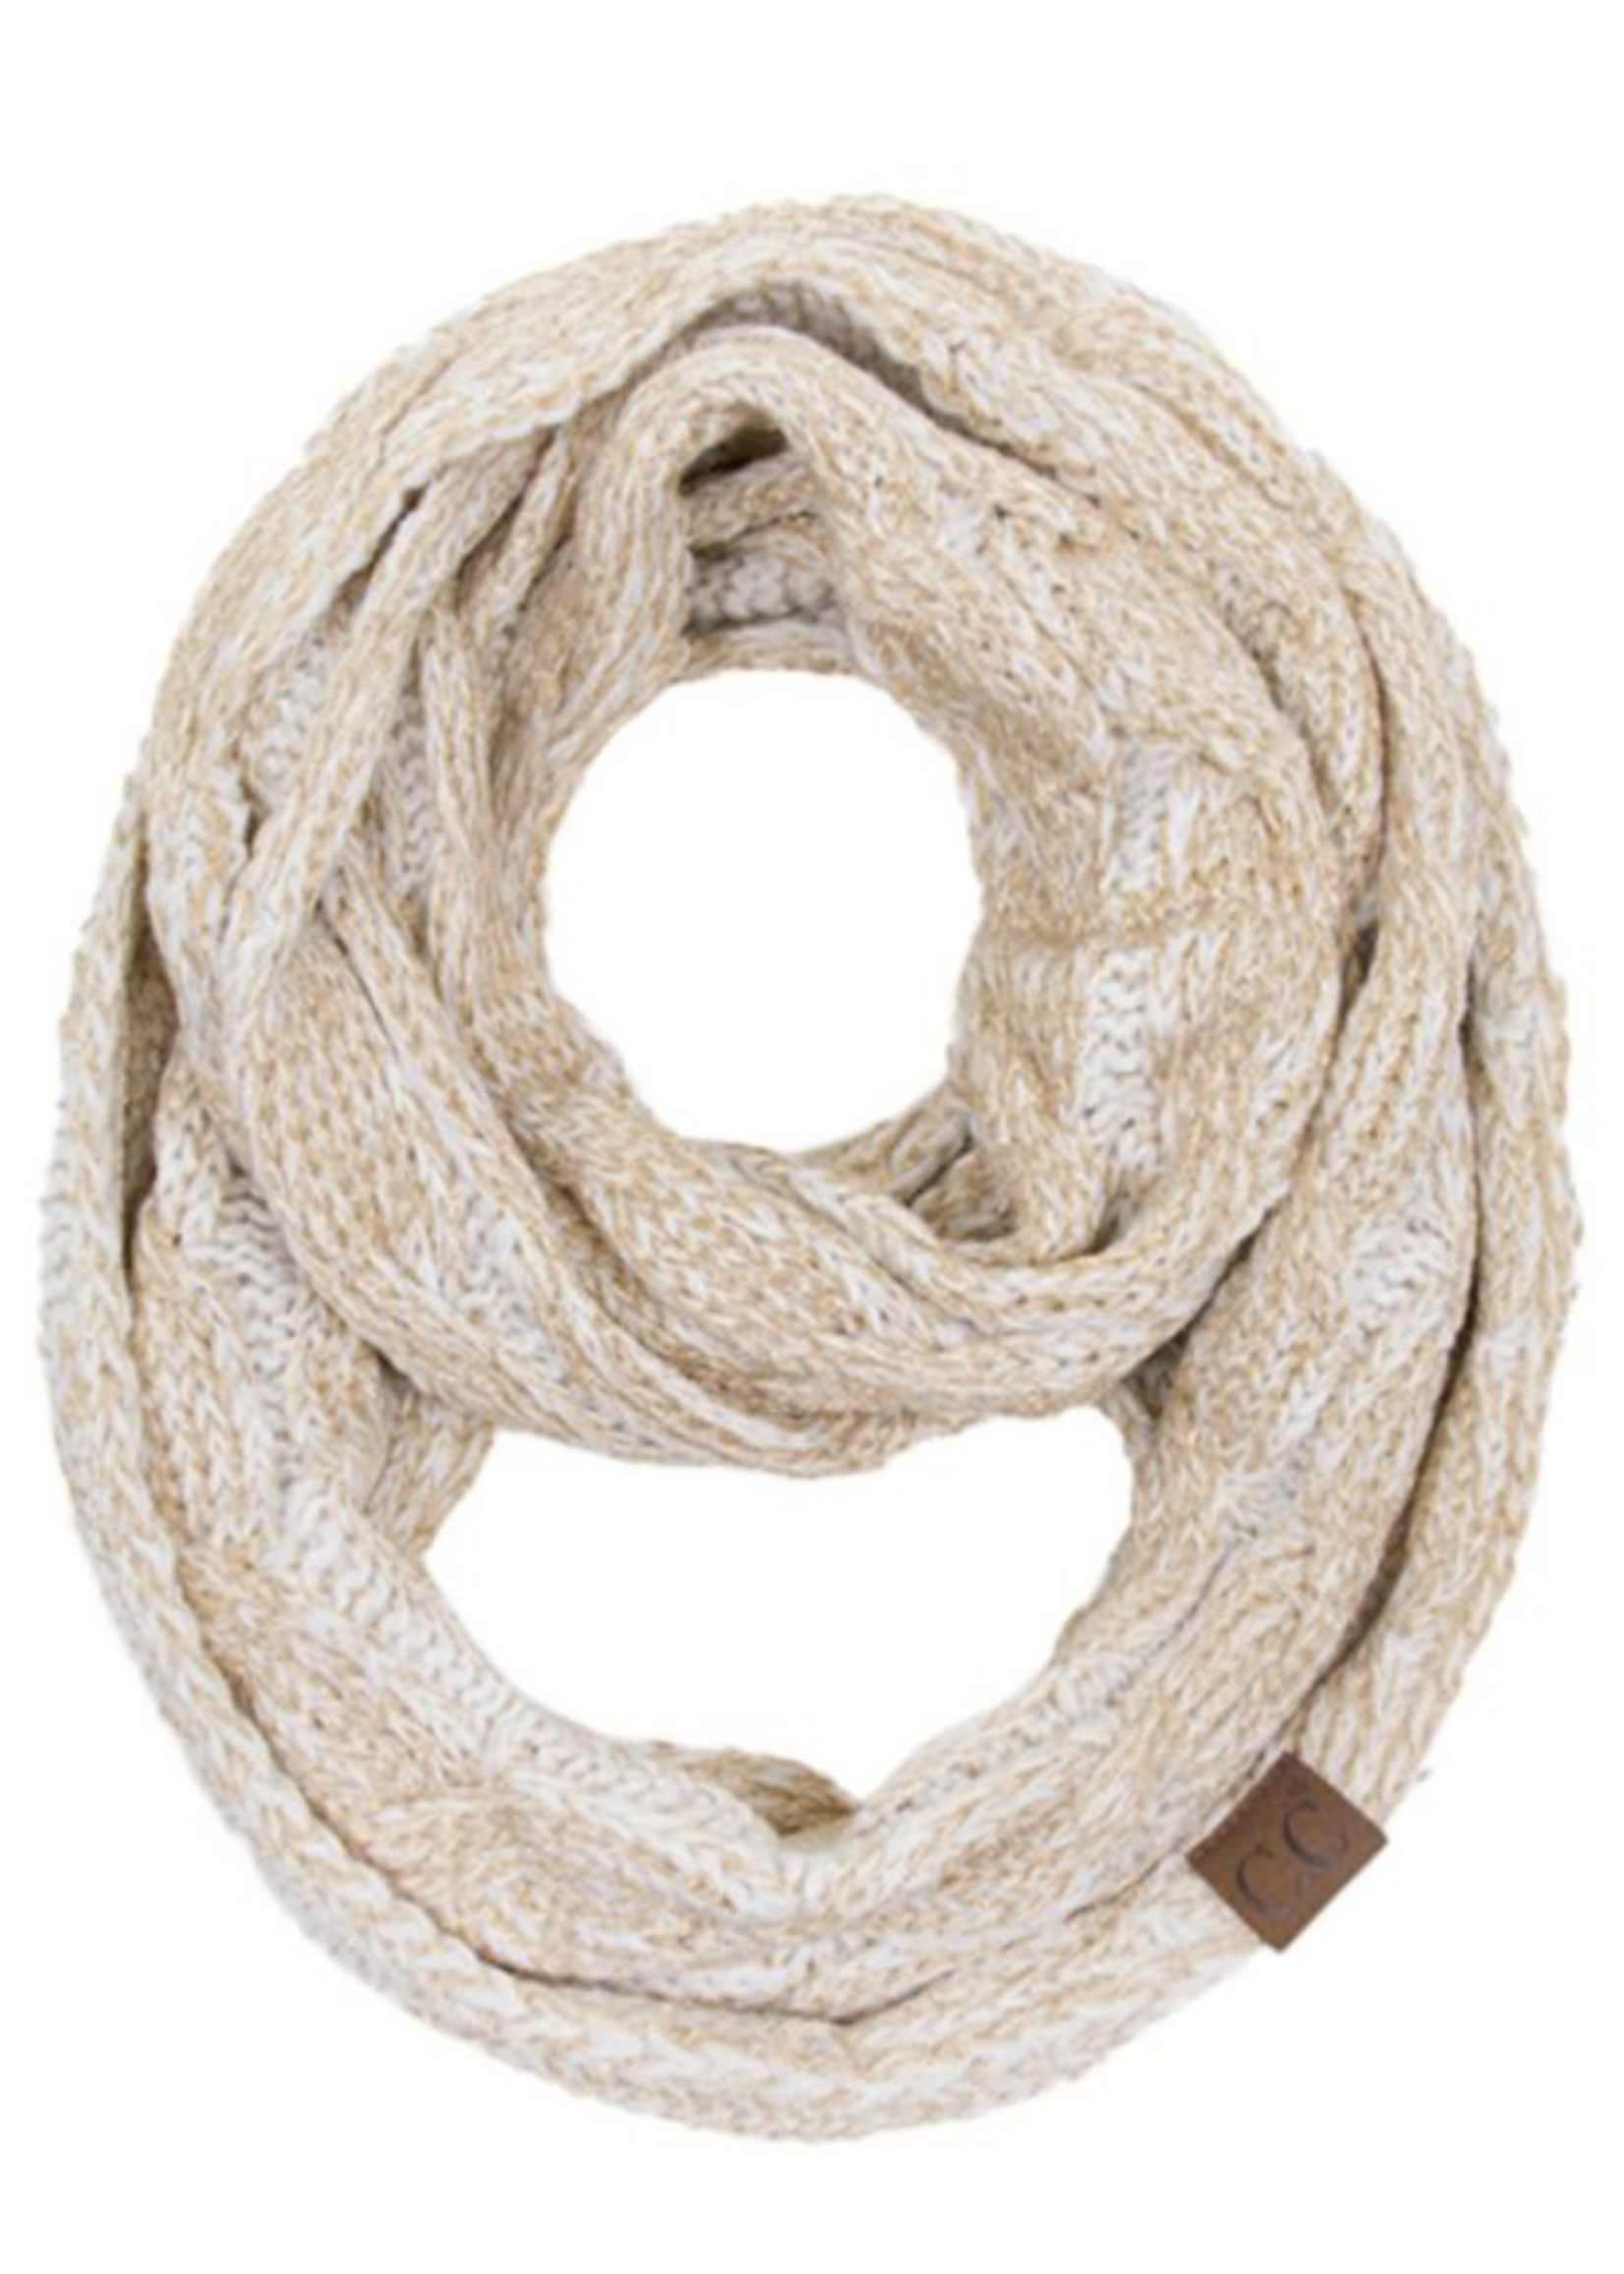 C.C Infinity scarf *FINAL SALE*